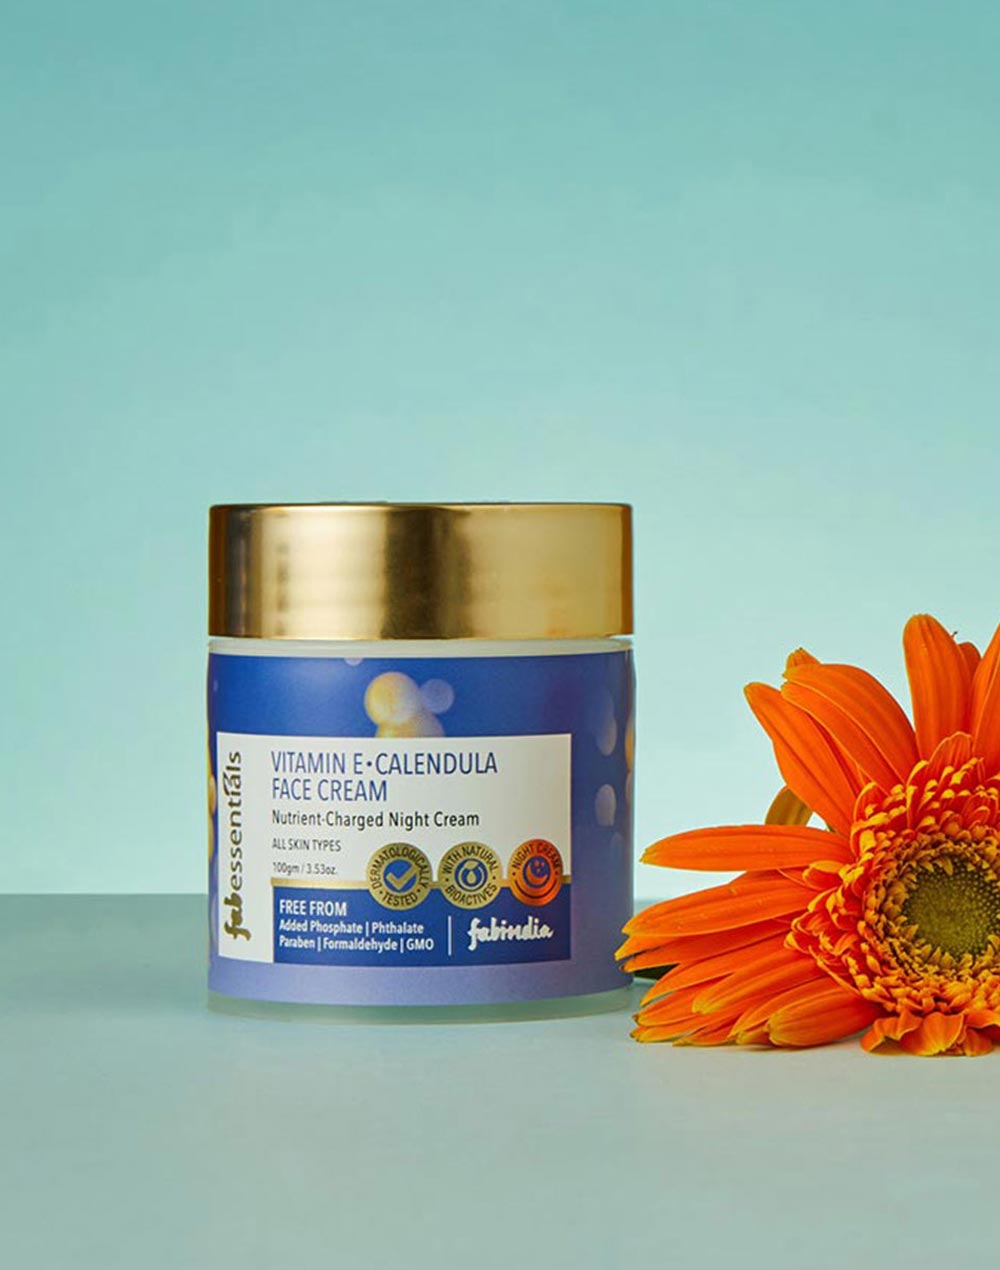 Fabessentials Vitamin E Calendula Face Cream - 50 gm